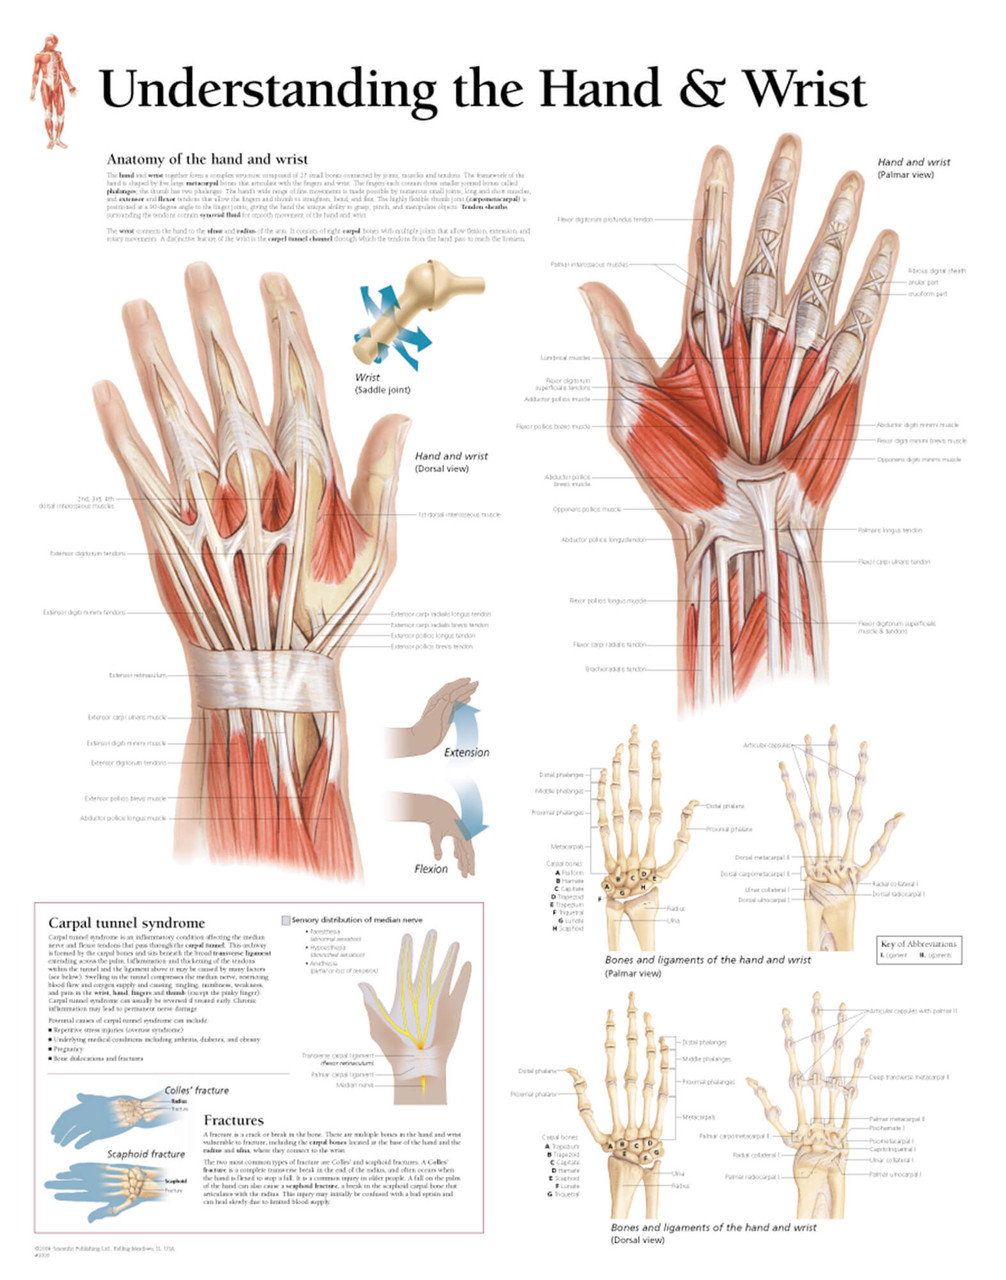 Hand Anatomy Drawing